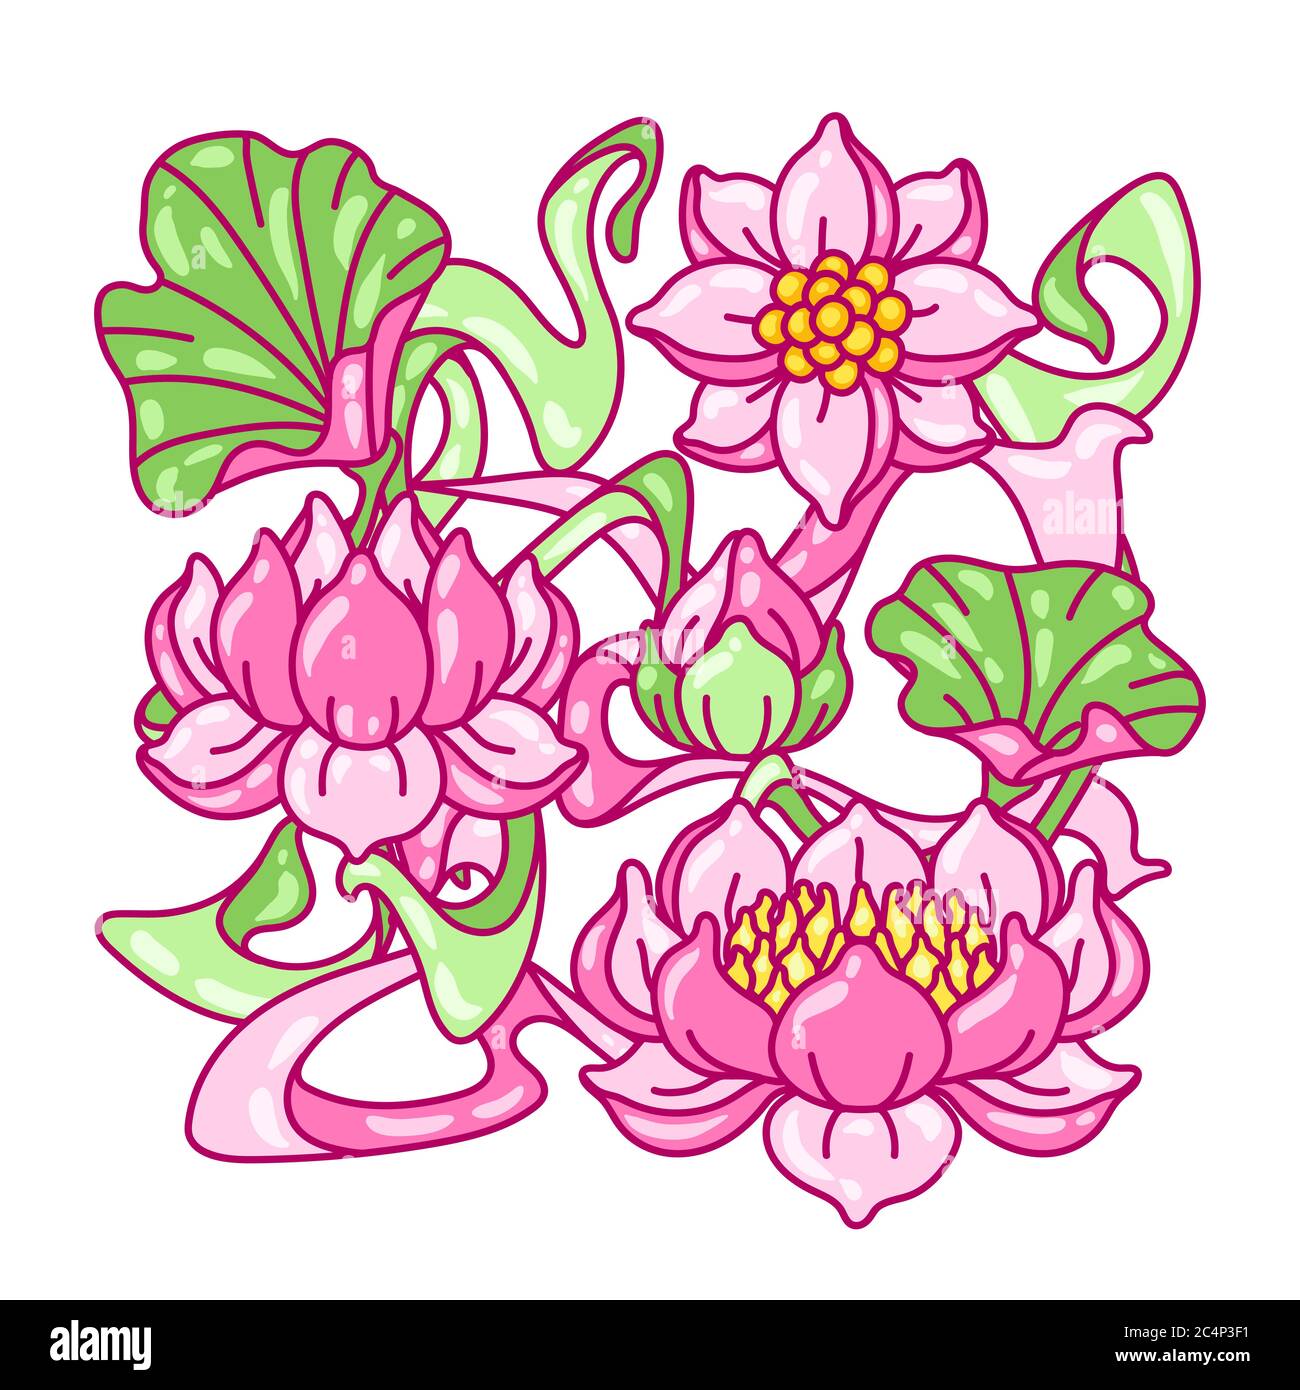 Hintergrund mit Lotusblumen. Jugendstil im Vintage-Stil. Stock Vektor